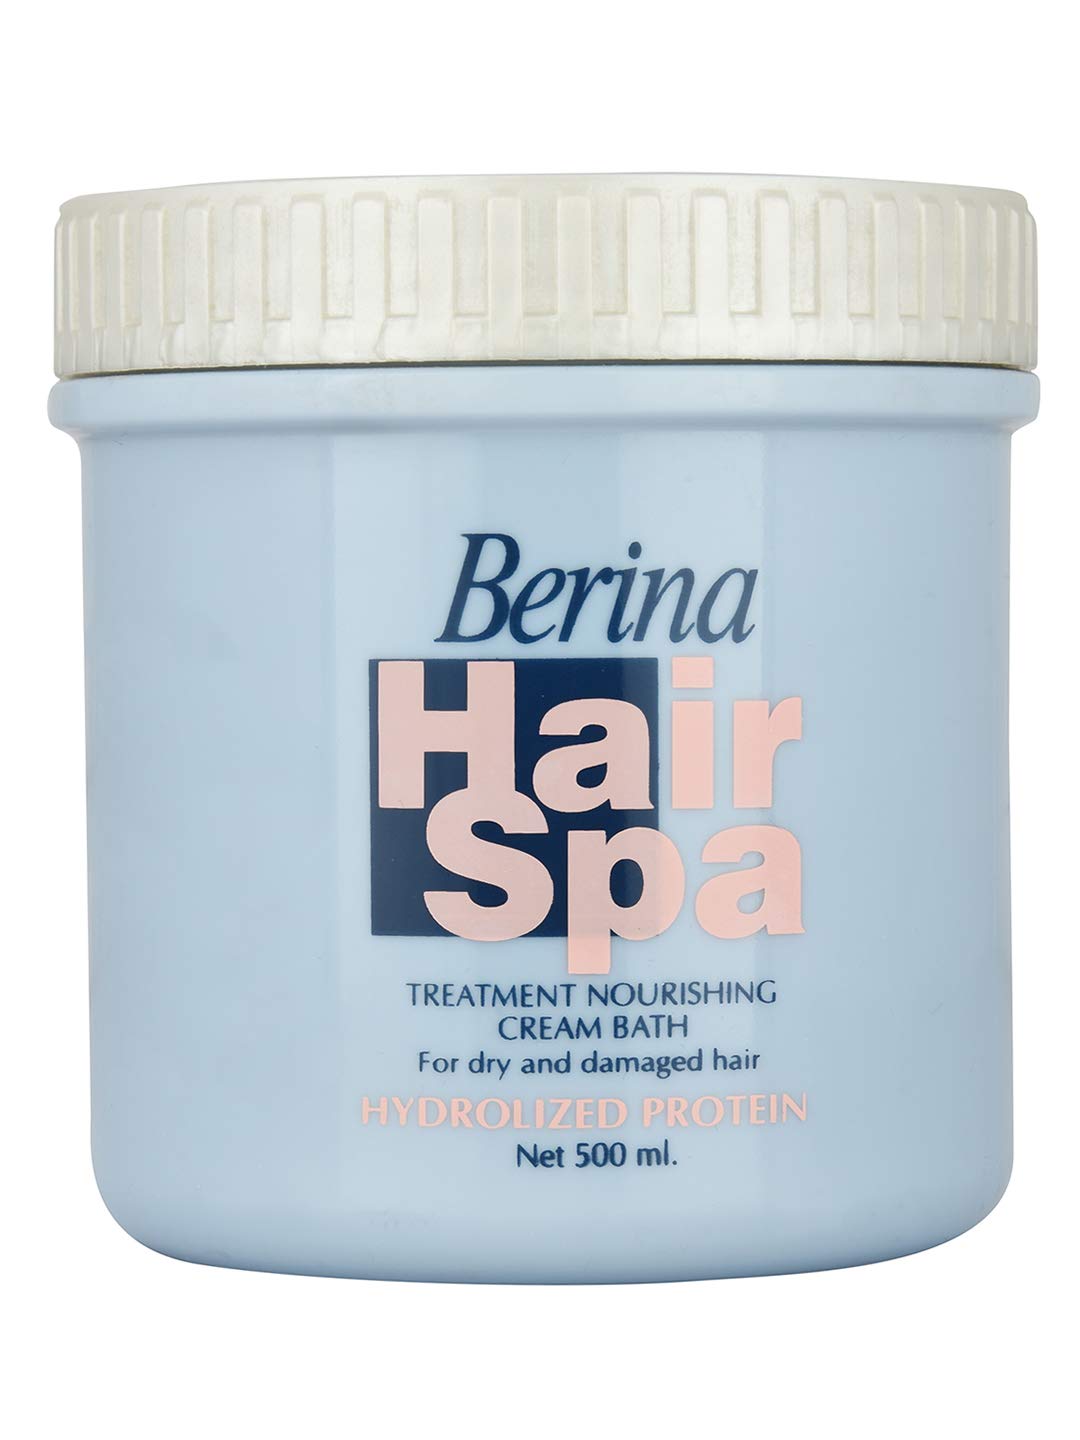 Berina Hair Spa Cream Price in India 500ml - Lelow Online